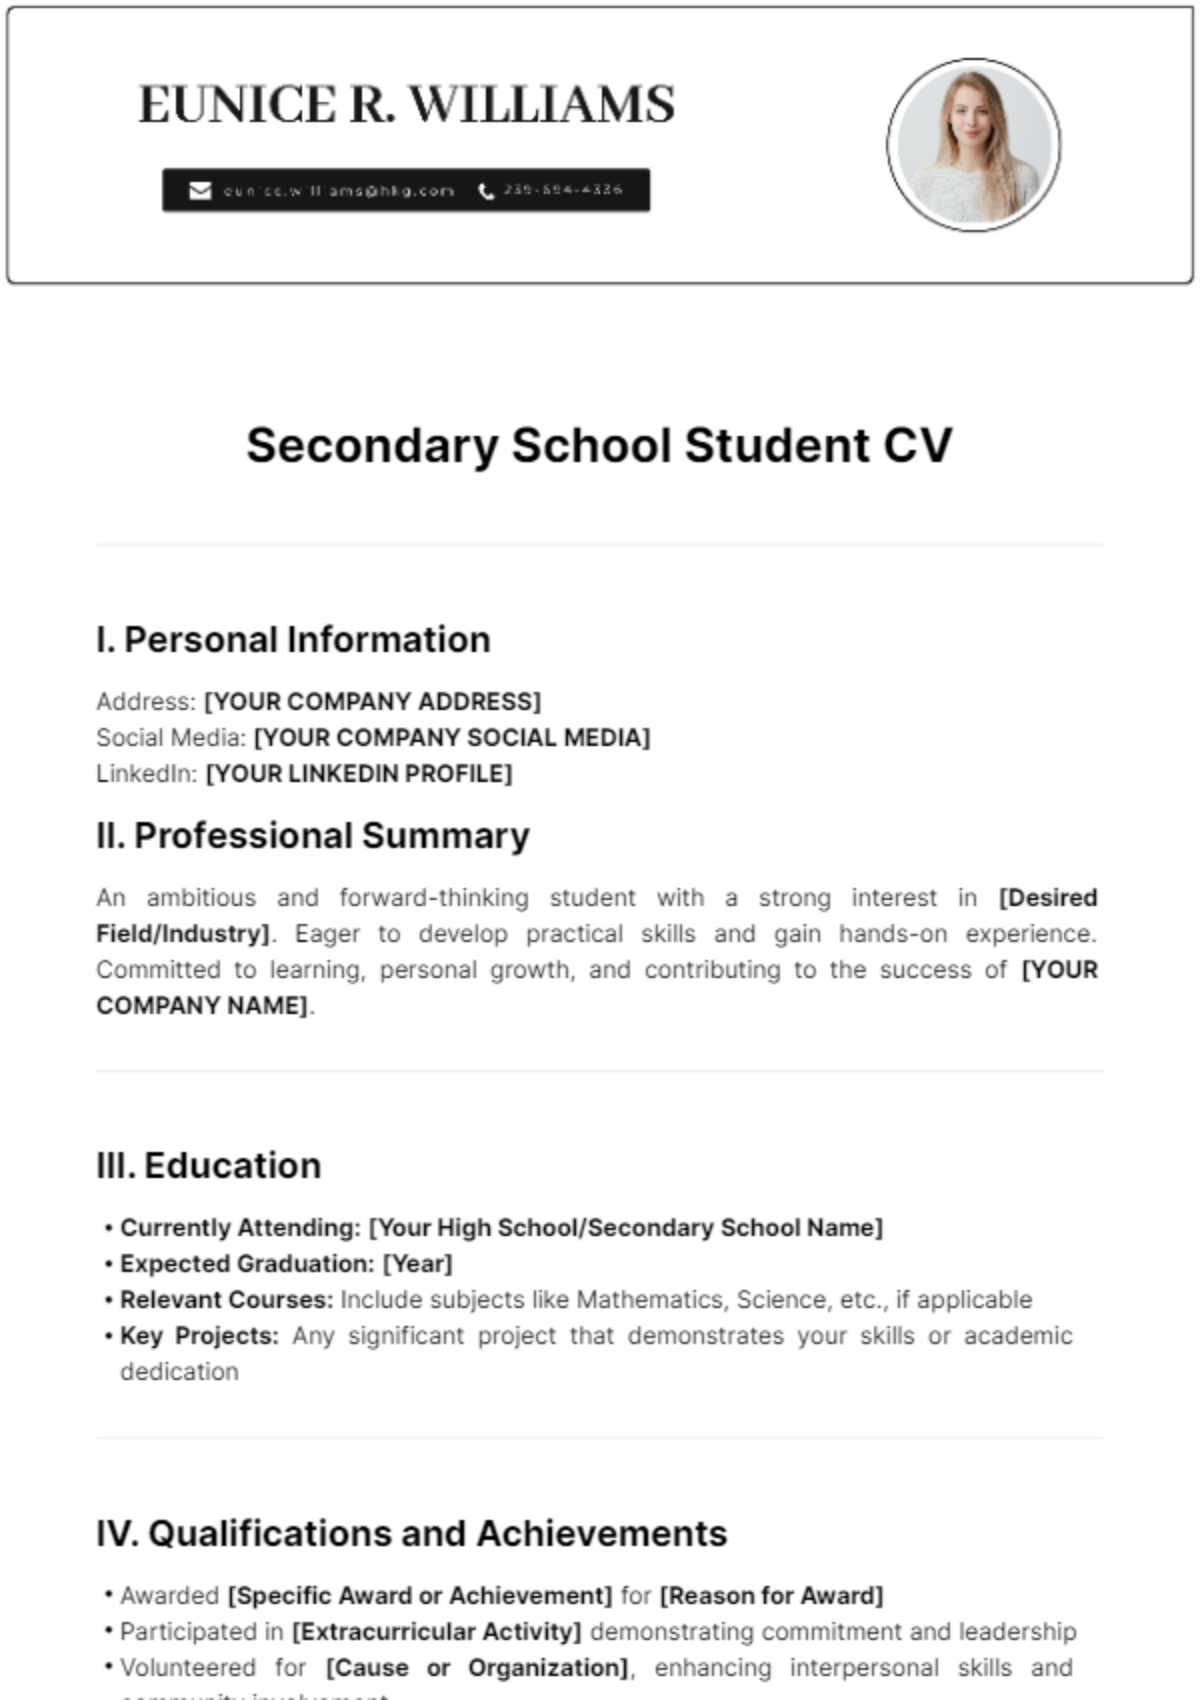 Secondary School Student CV Template